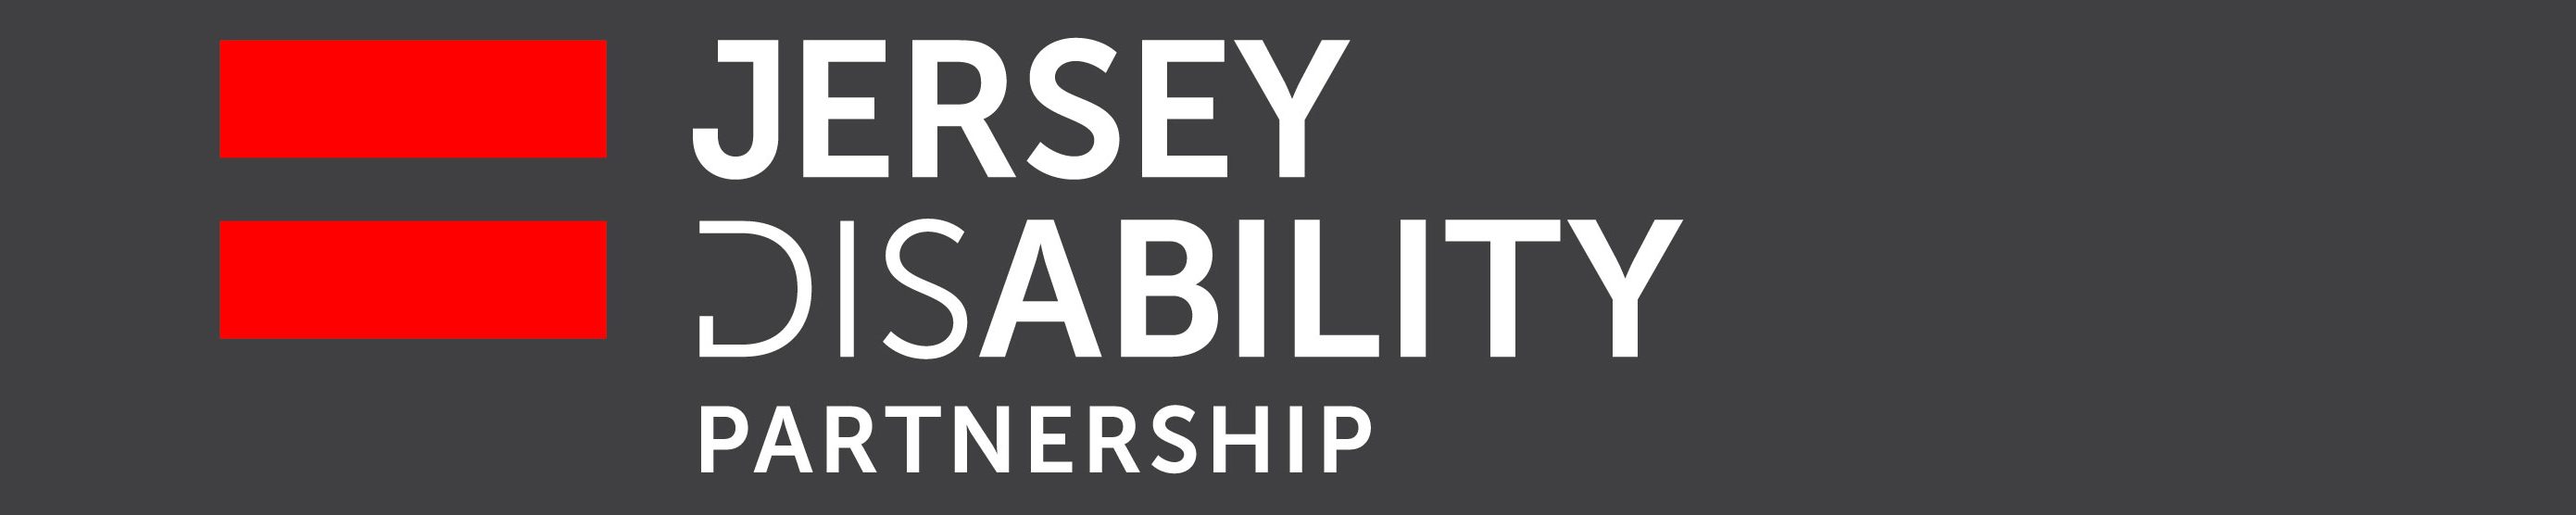 Jersey Disability Partnership logo